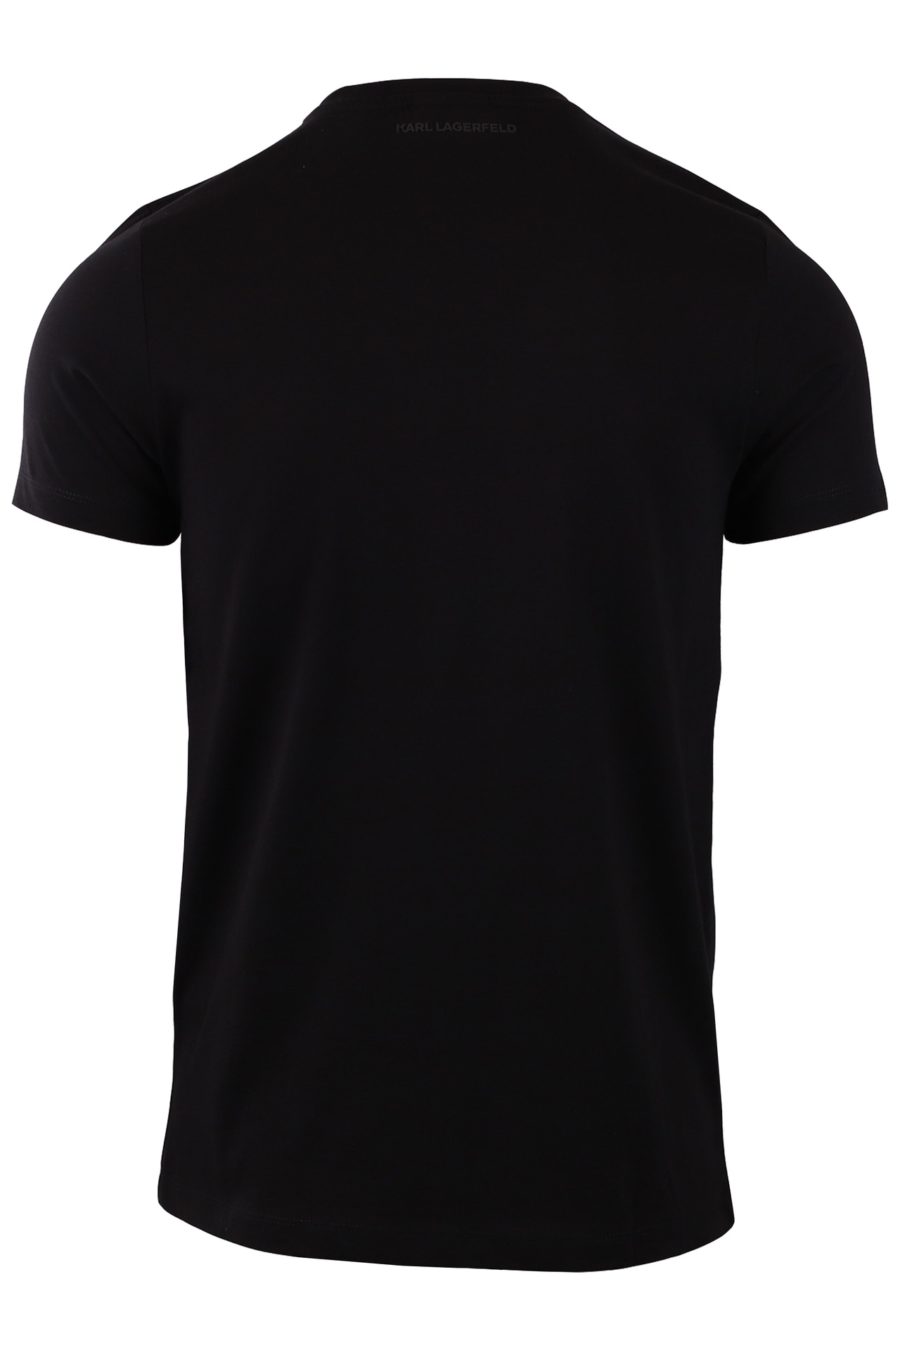 Camiseta negra estampado plateado "Karl" - fd1600d420233fa4197b3f8674fc2d30563a02ed